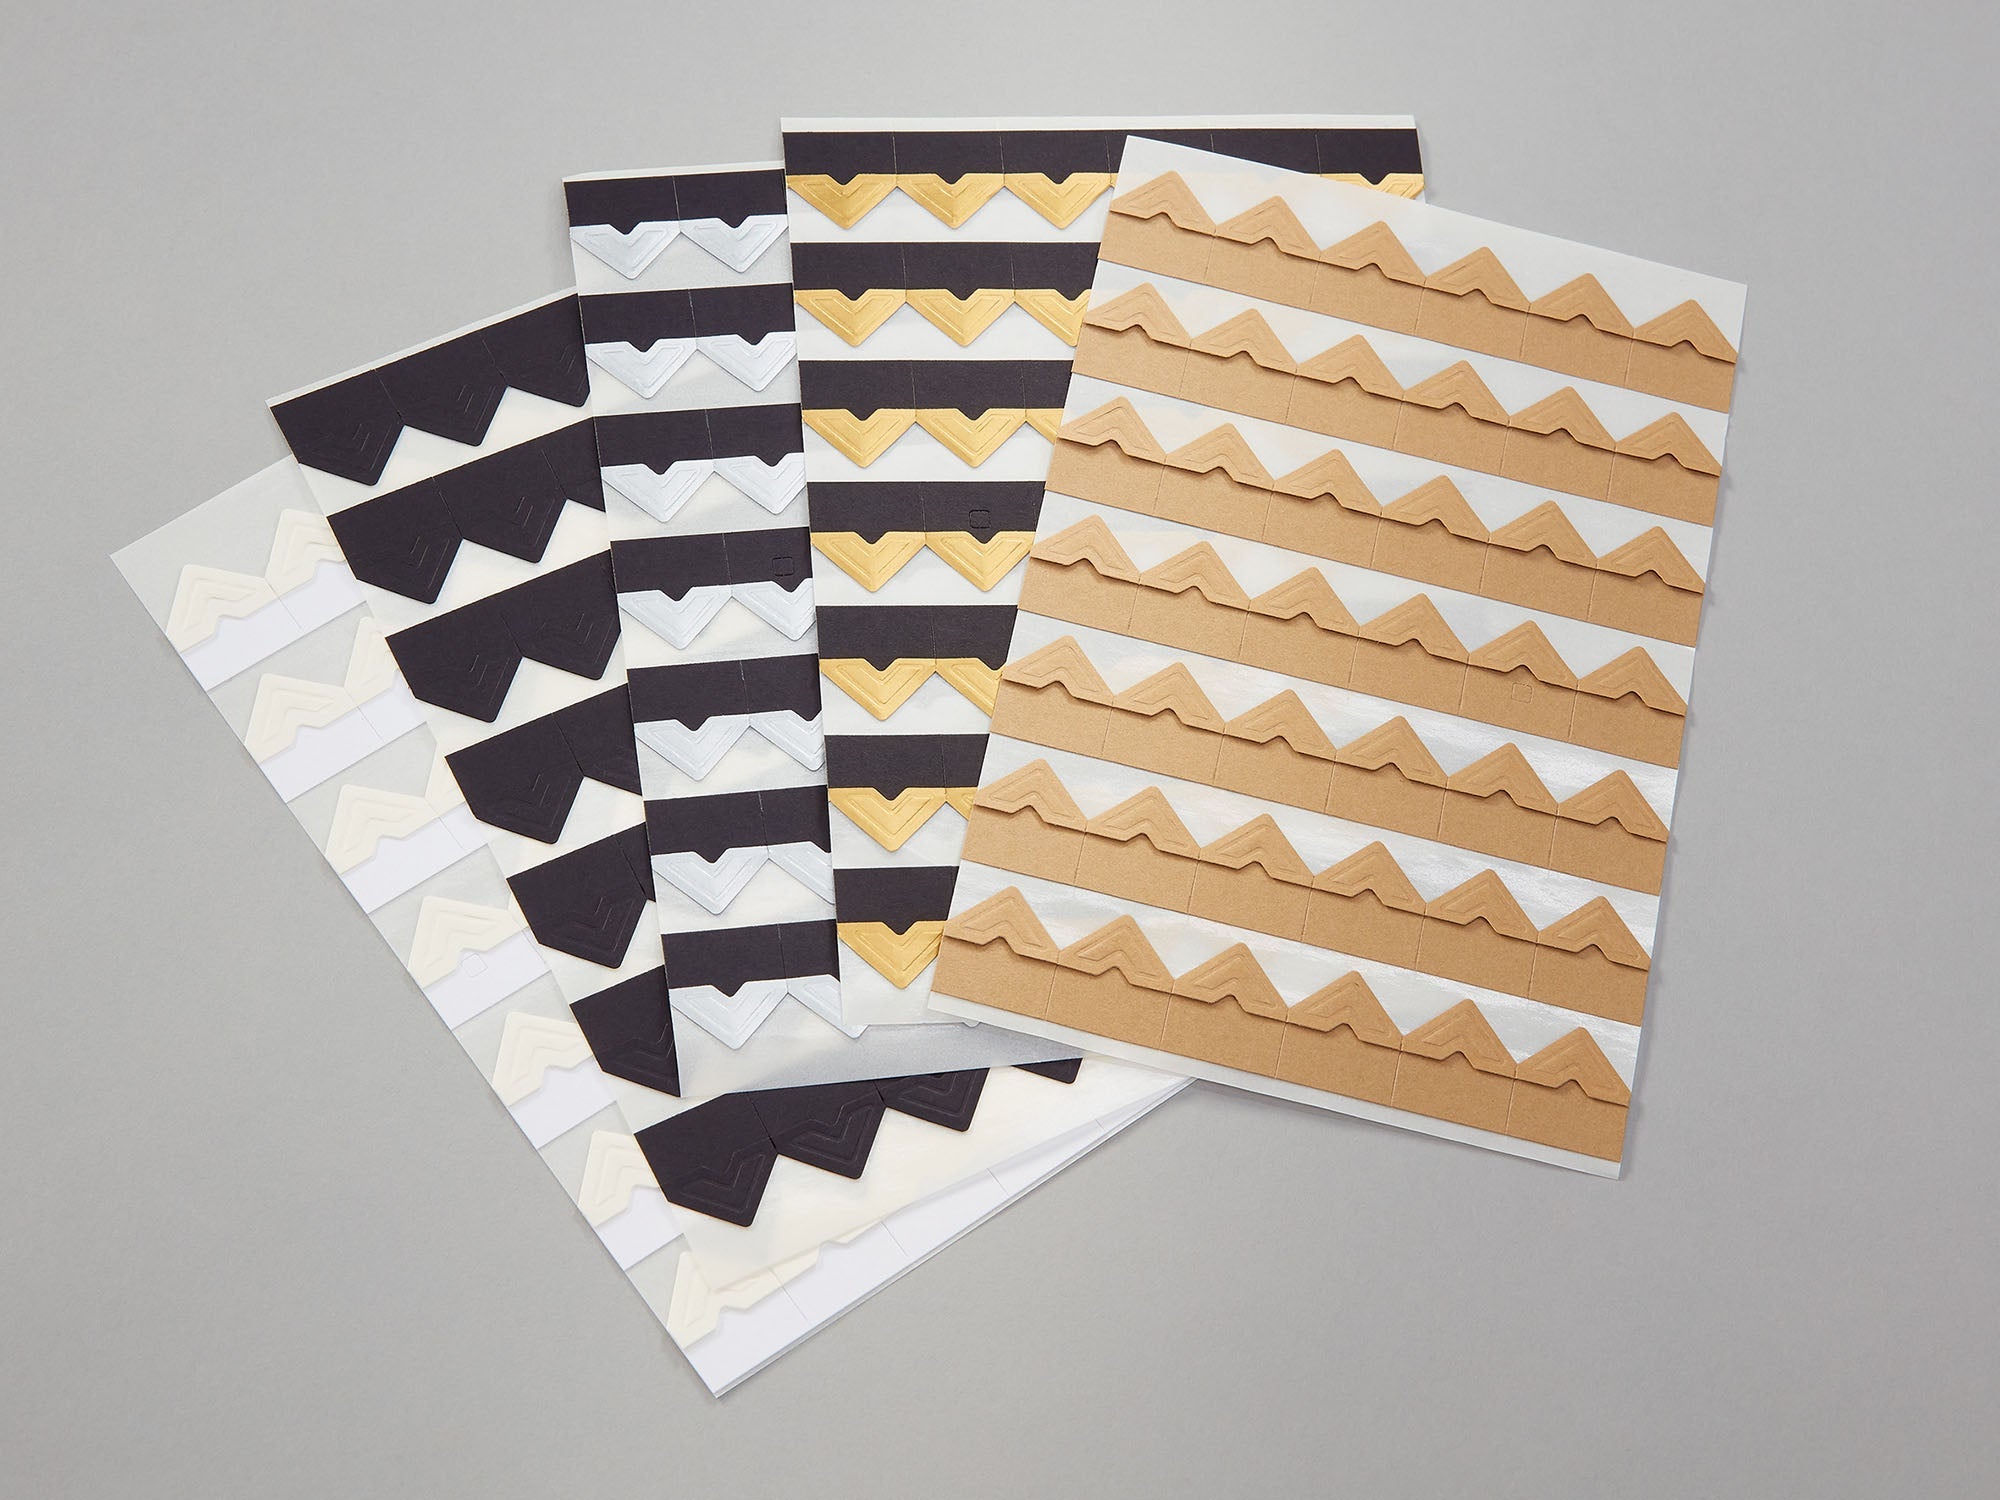 SCRAPBOOK ADHESIVES Self-Adhesive Paper Photo Corners: Gold - Scrapbook  Generation